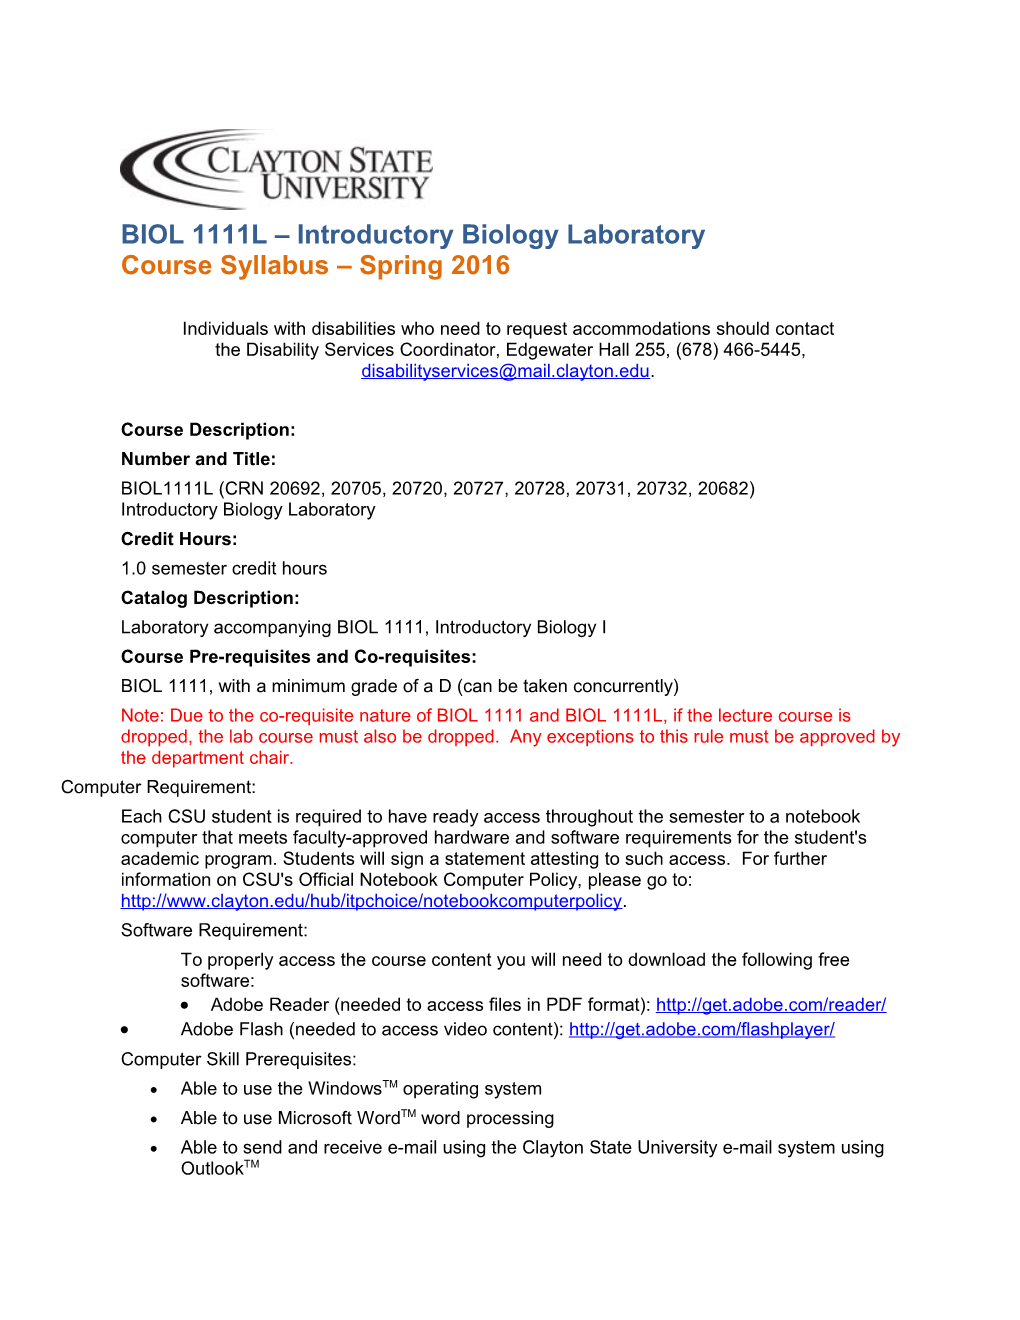 BIOL 1111L Introductorybiology Laboratory Course Syllabus Spring 2016